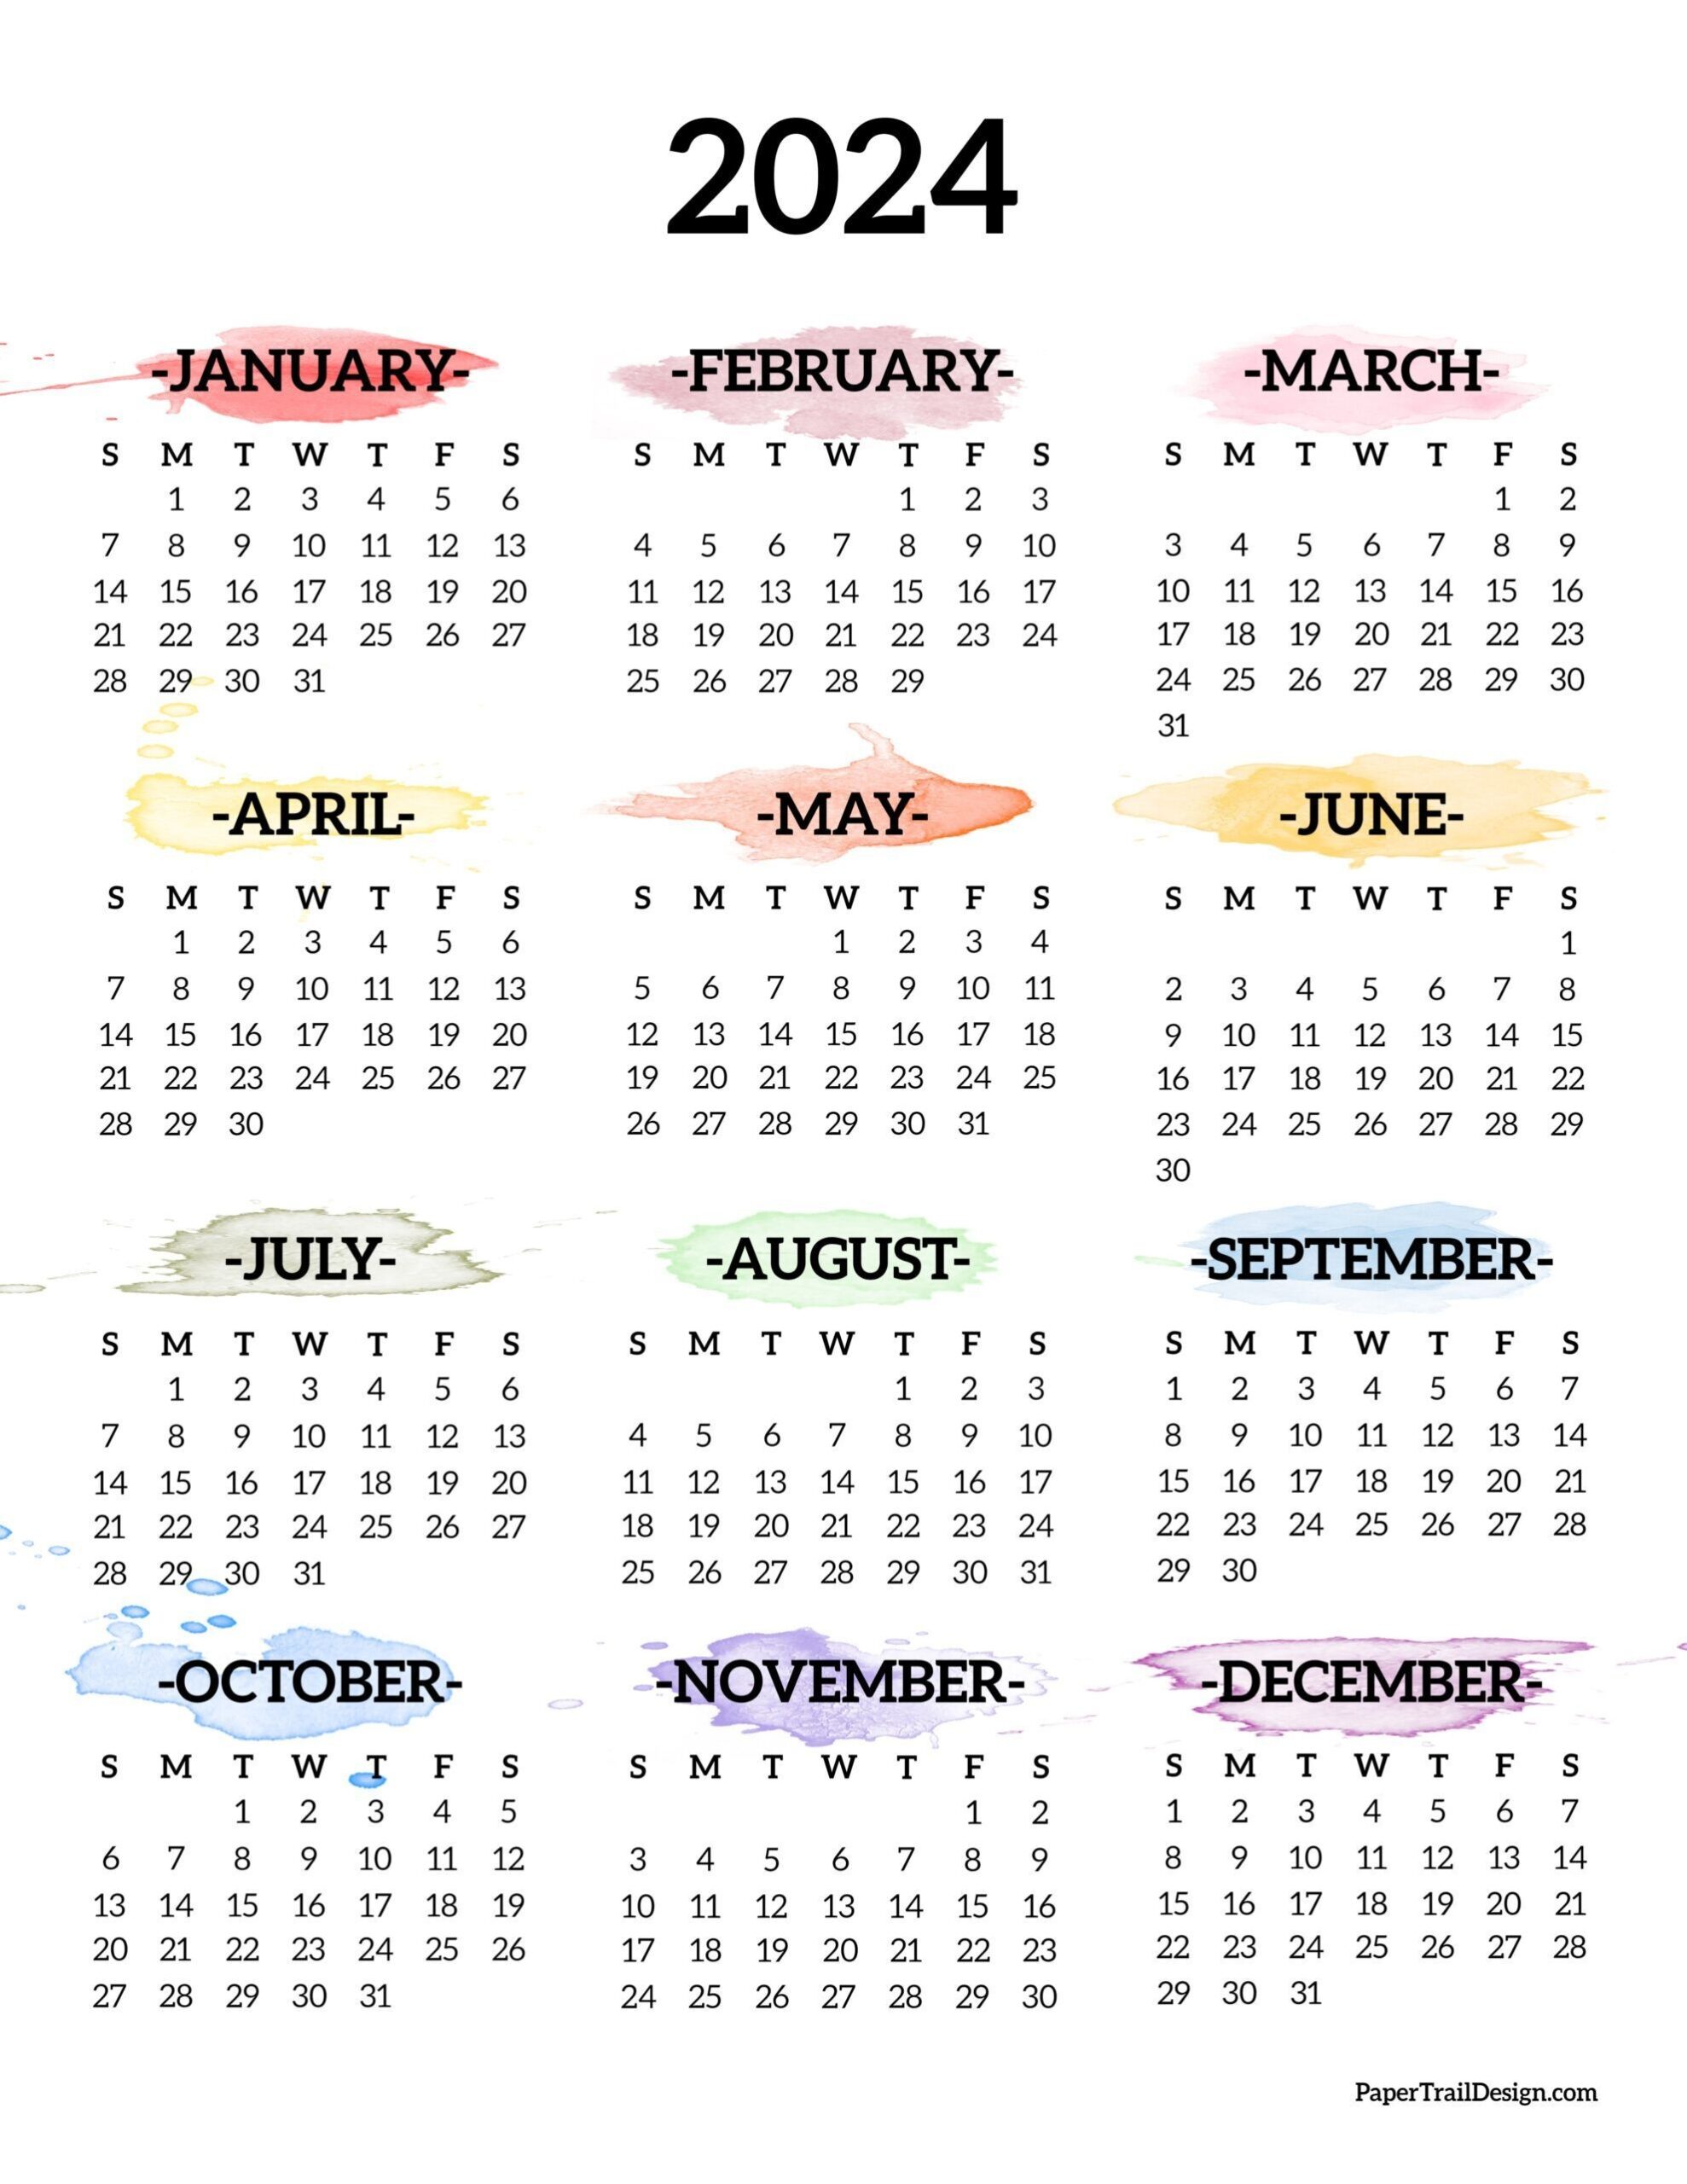 Print This Fun 2024 One Page Calendar In A Fun Rainbow Watercolor